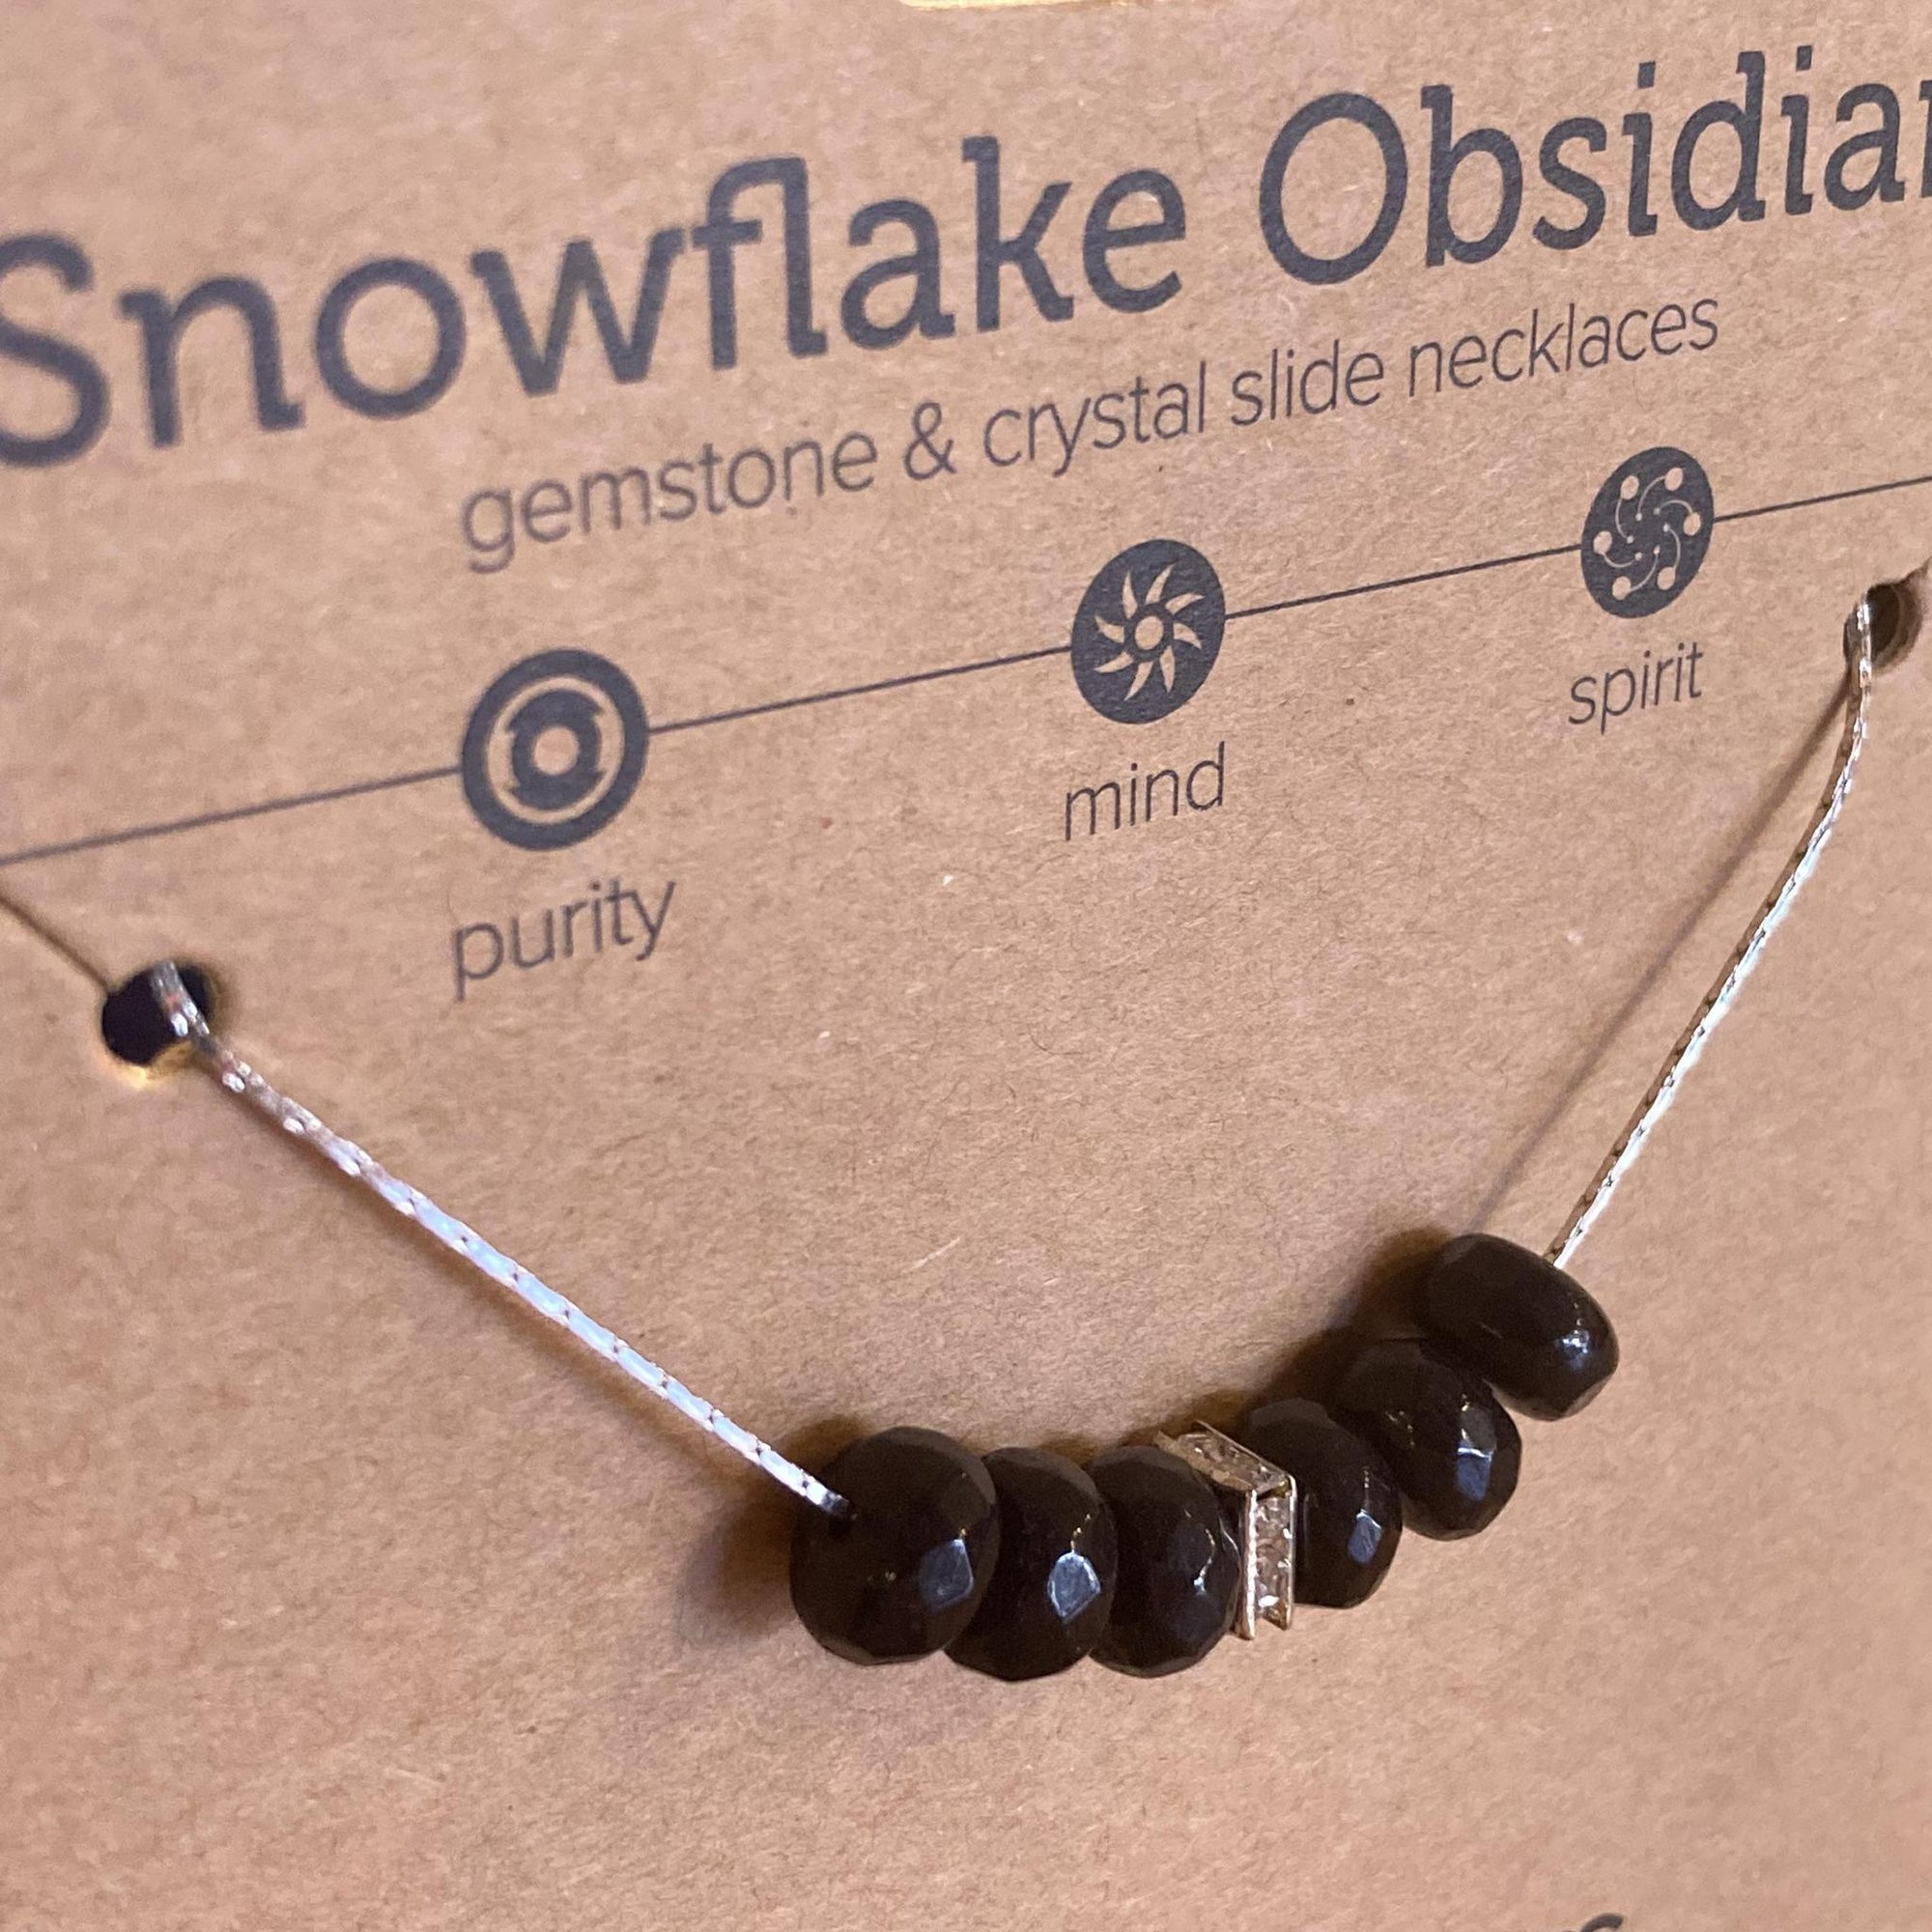 Gemstone Slide Necklace | Snowflake Obsidian